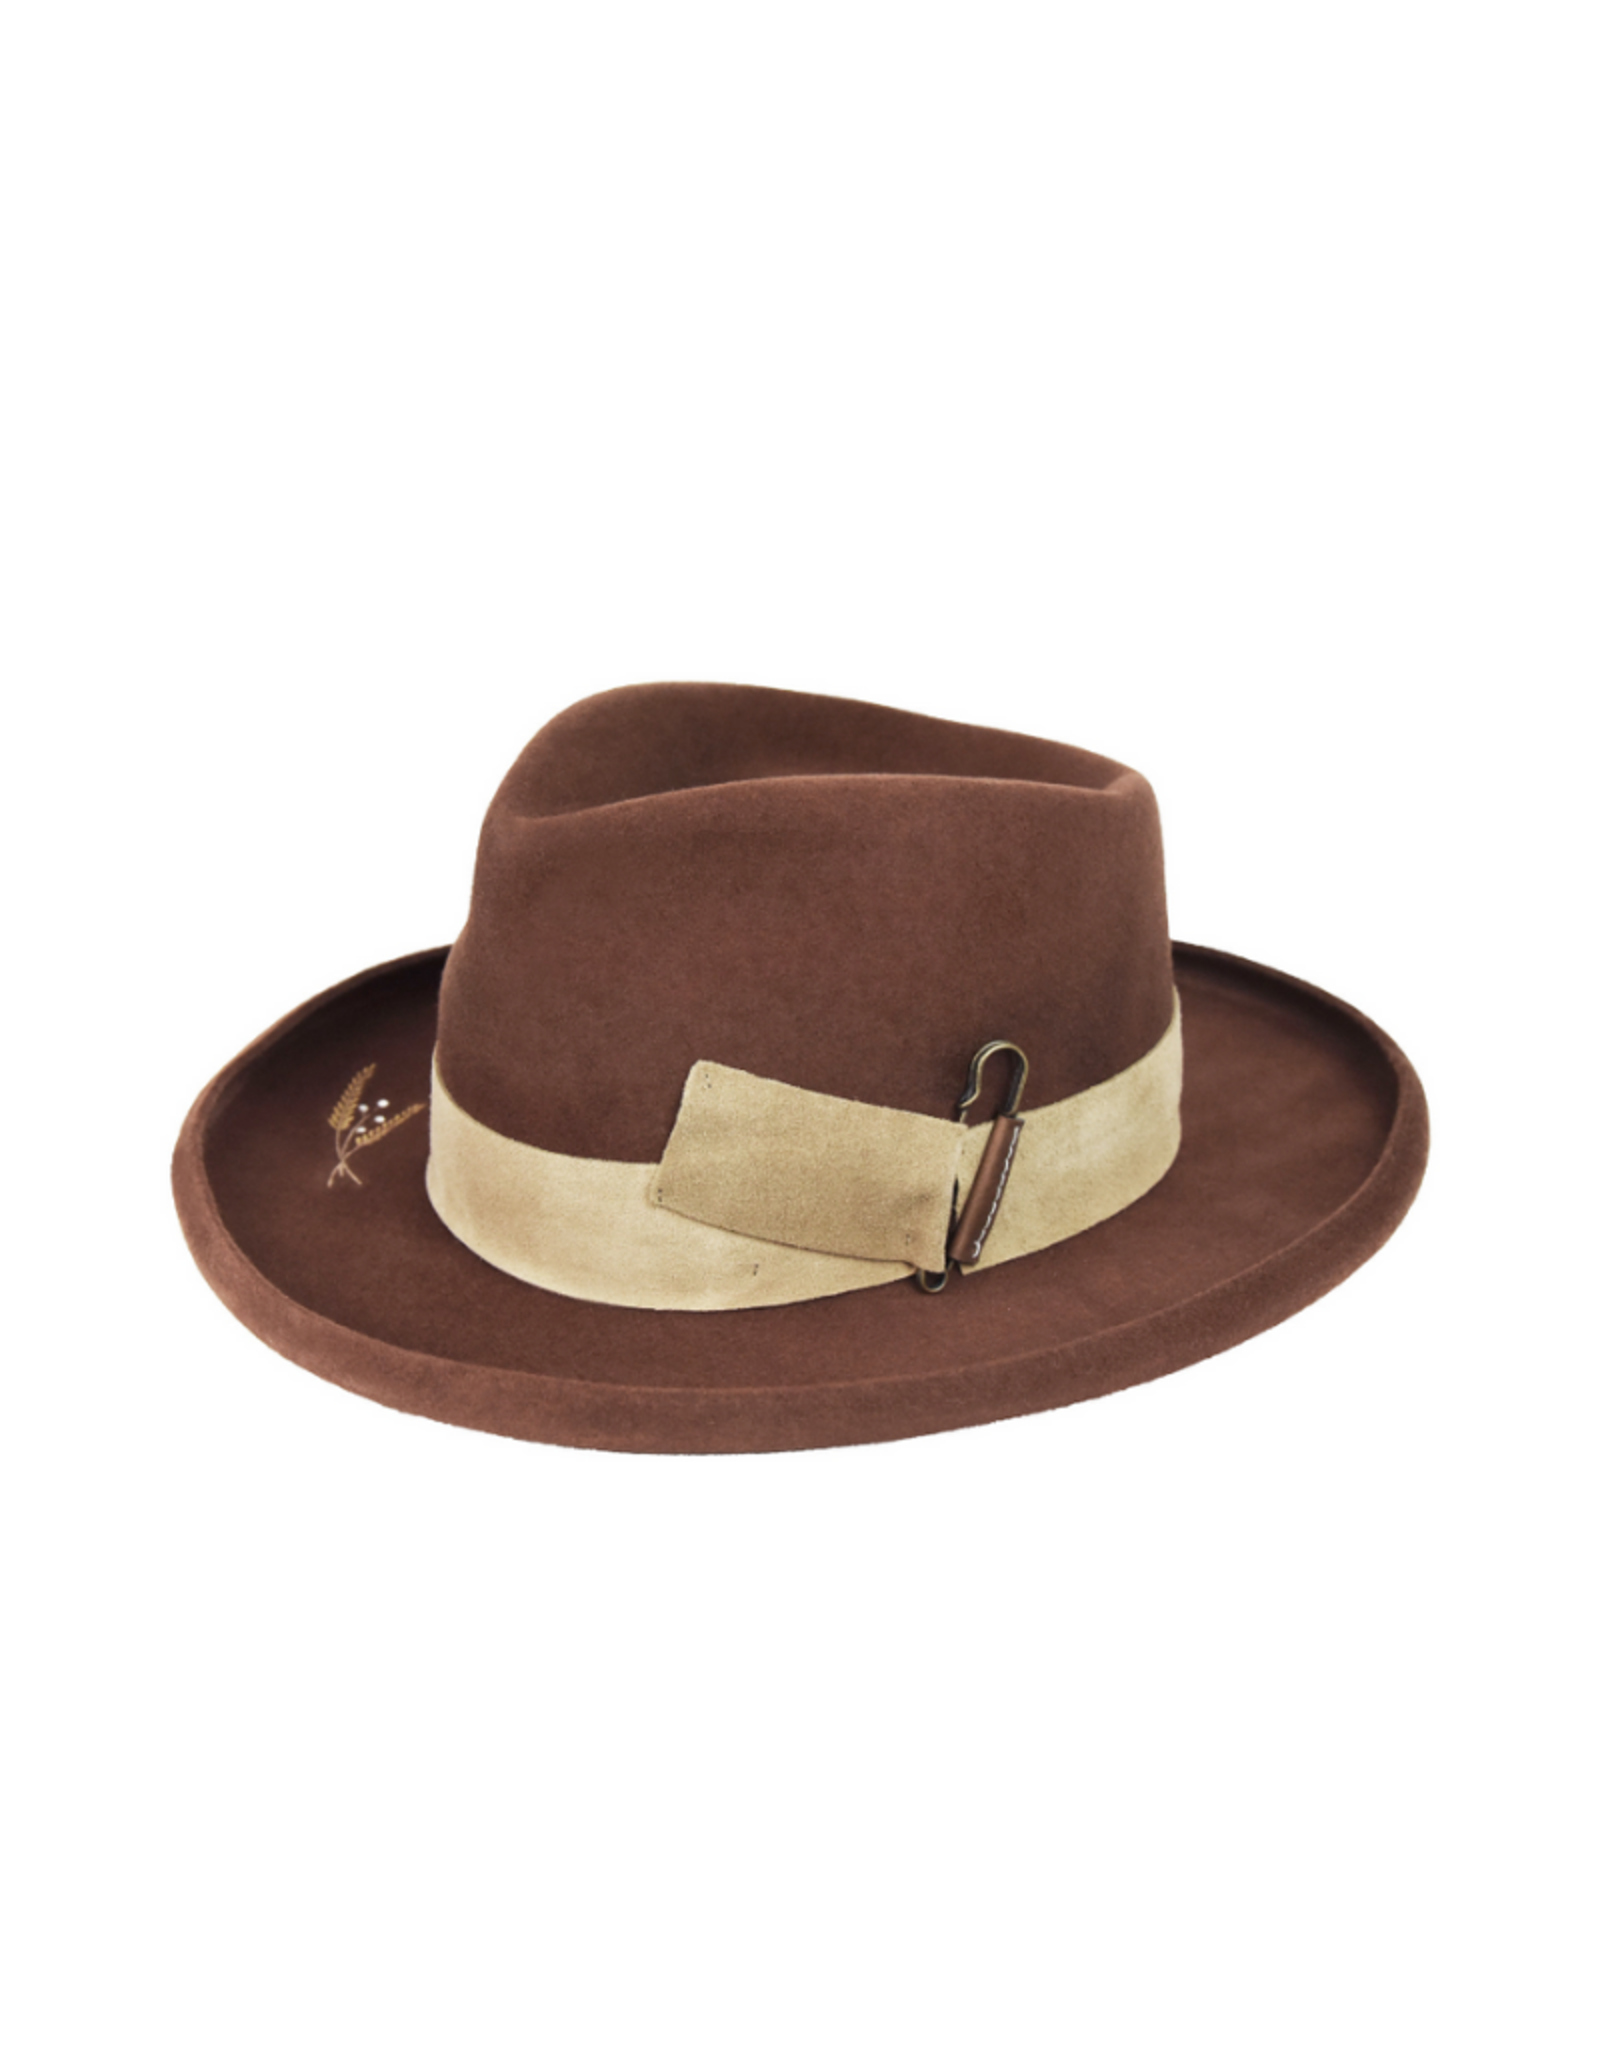 Bailey Hat Co. HAT-FEDORA "CASVILLE" W/TURNED UP BRIM BUCKLE TRIM